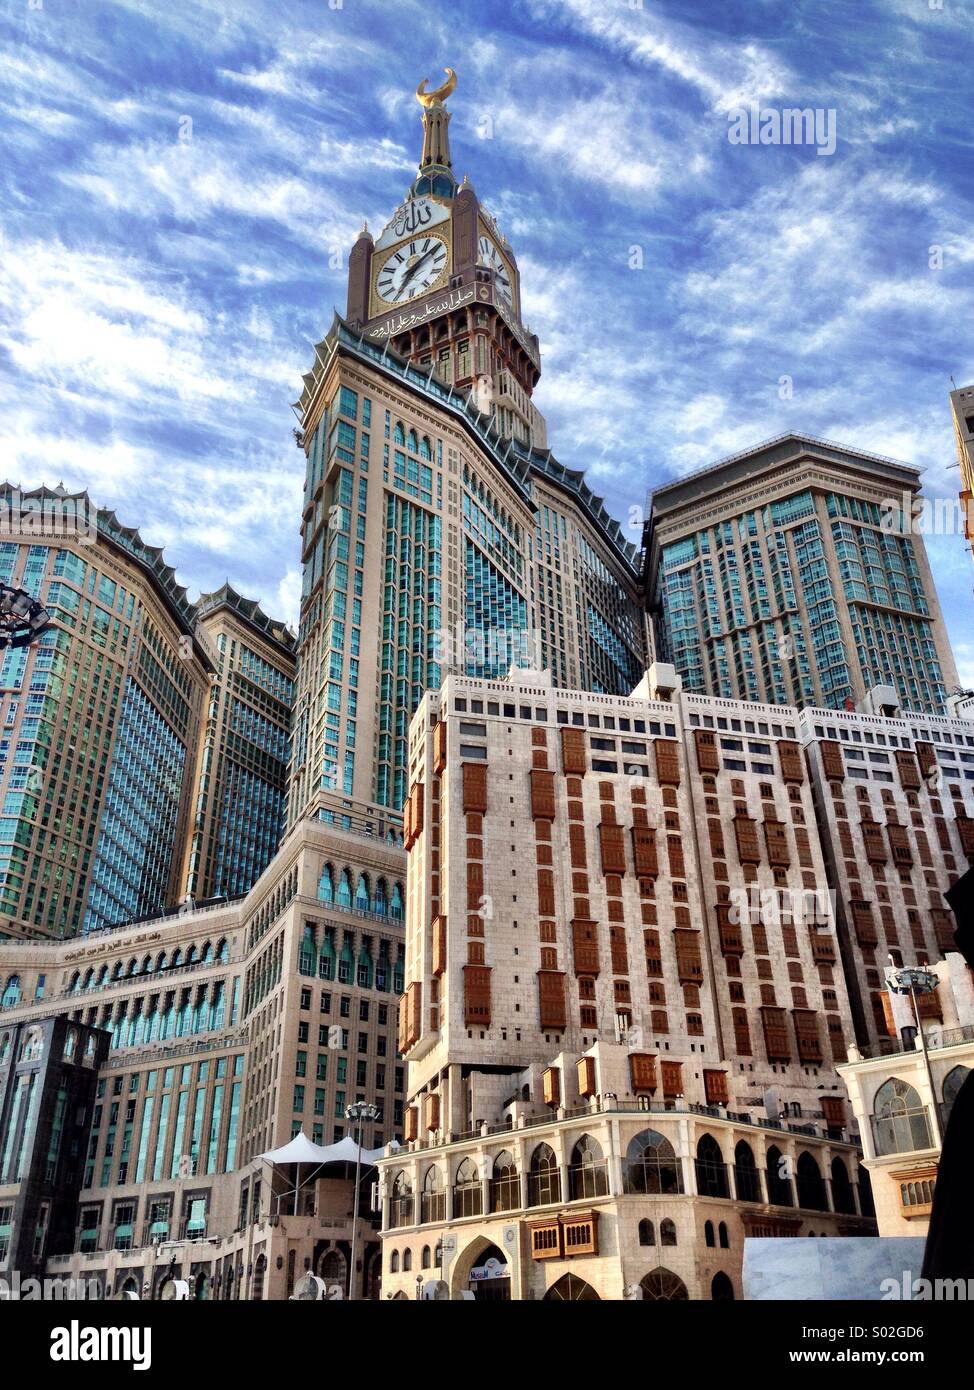 Mekkas große Uhr am Zam-Zam-Turm Stockfoto